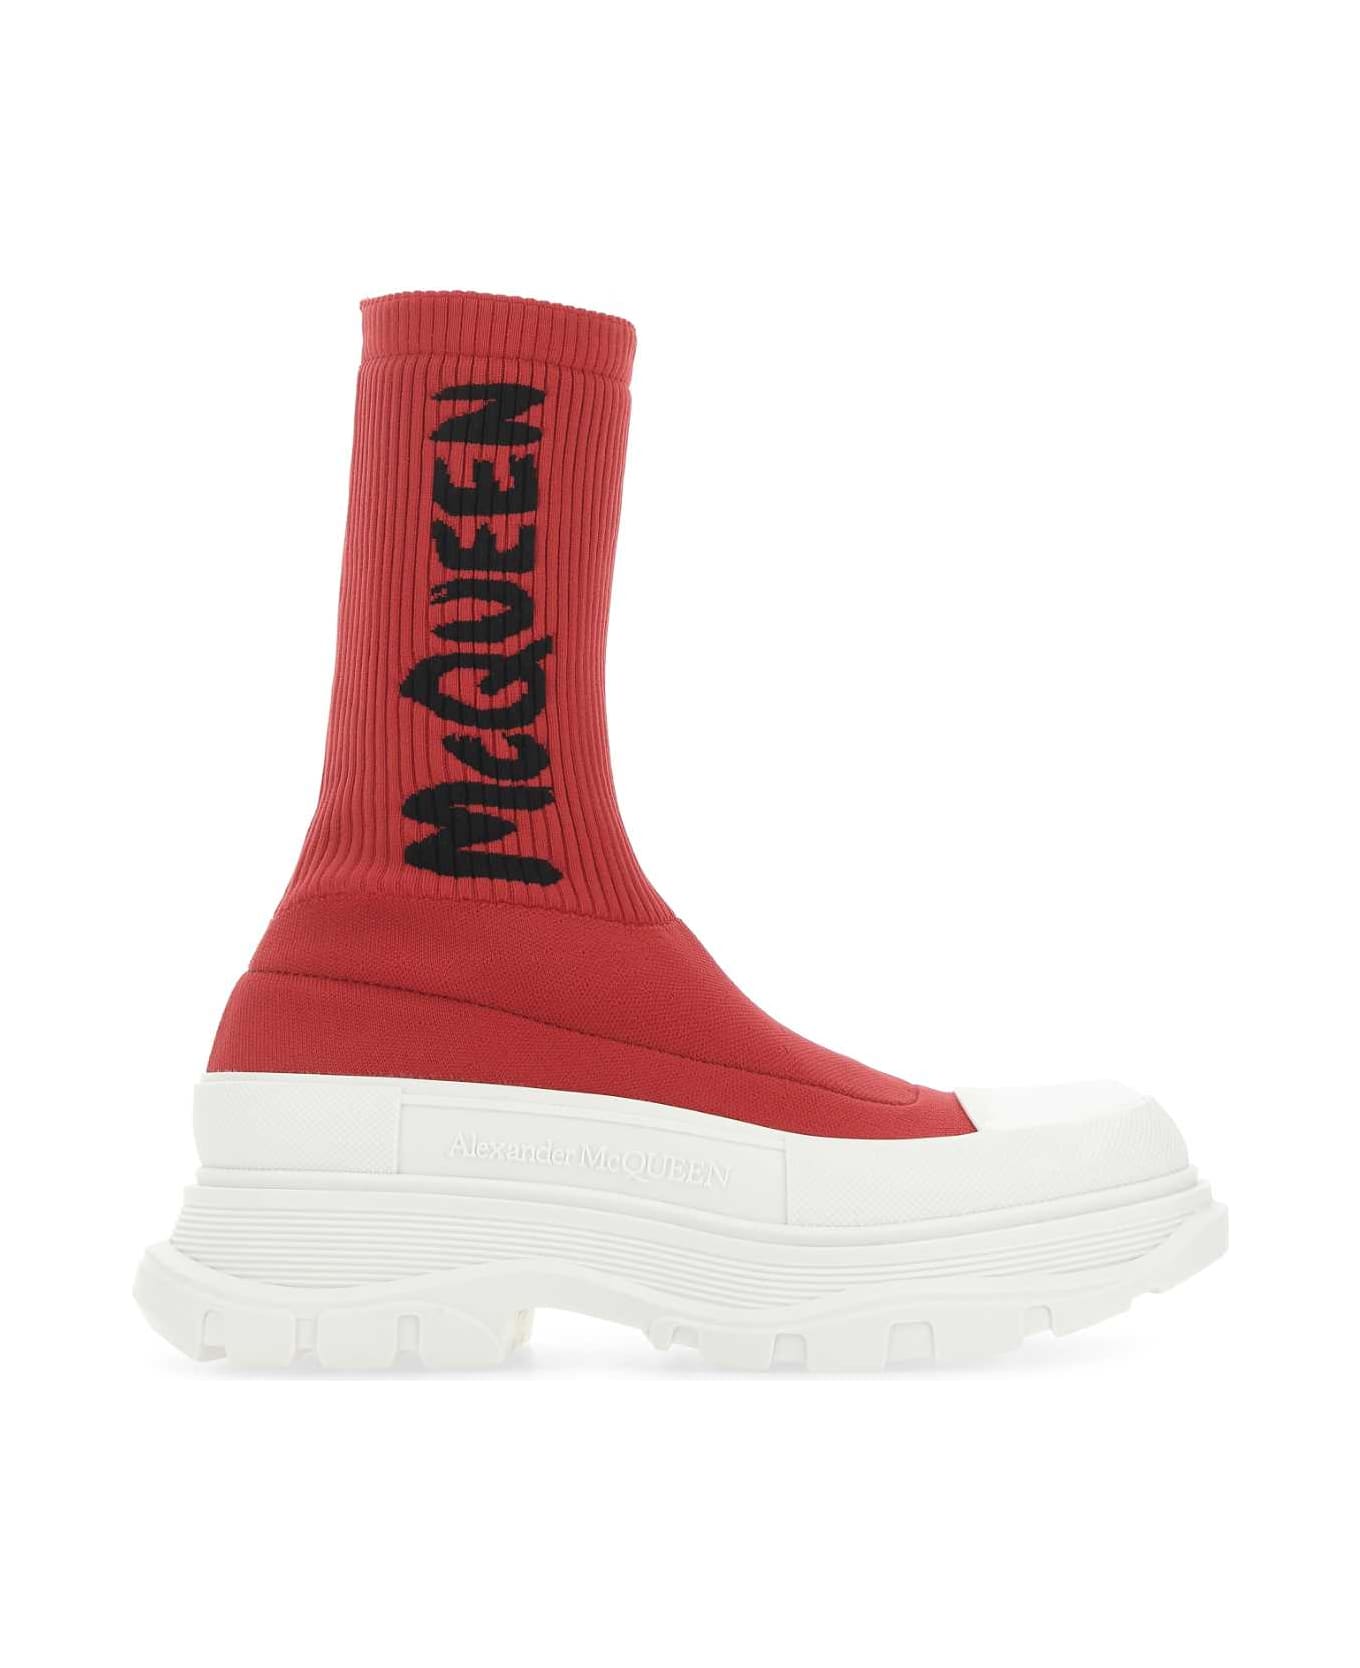 Alexander McQueen Red Stretch Nylon Tread Slick Sneakers - 5535